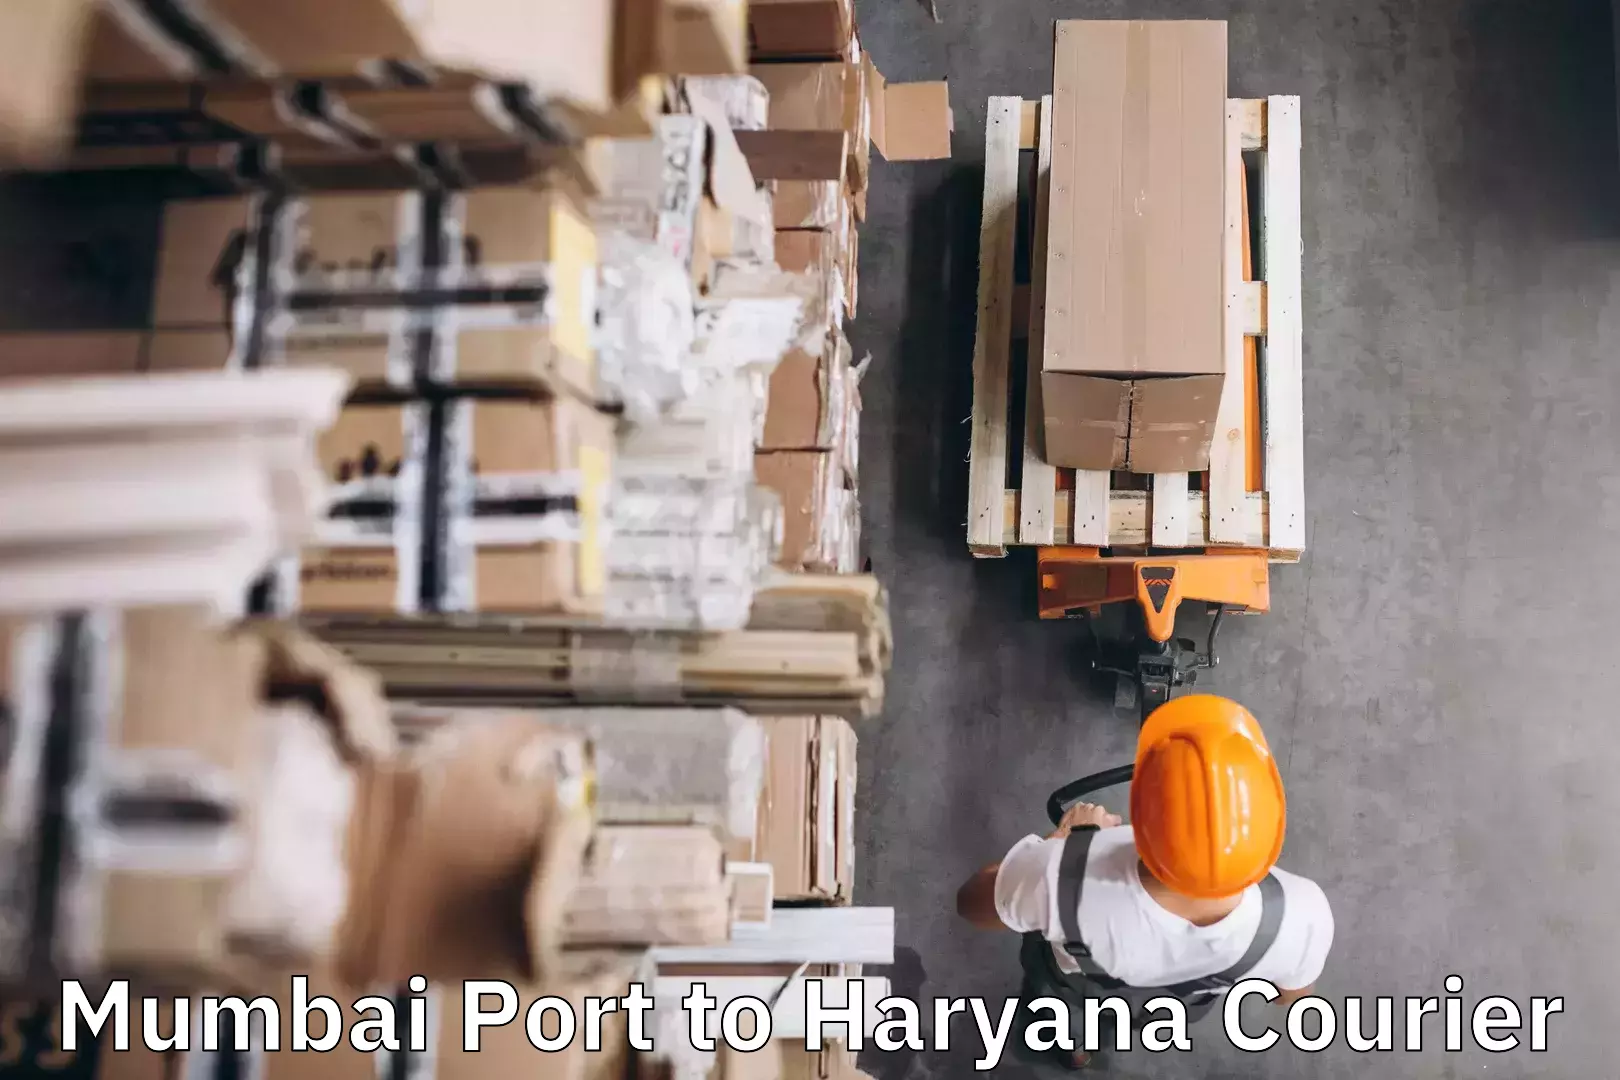 Luggage transport consultancy Mumbai Port to Fatehabad